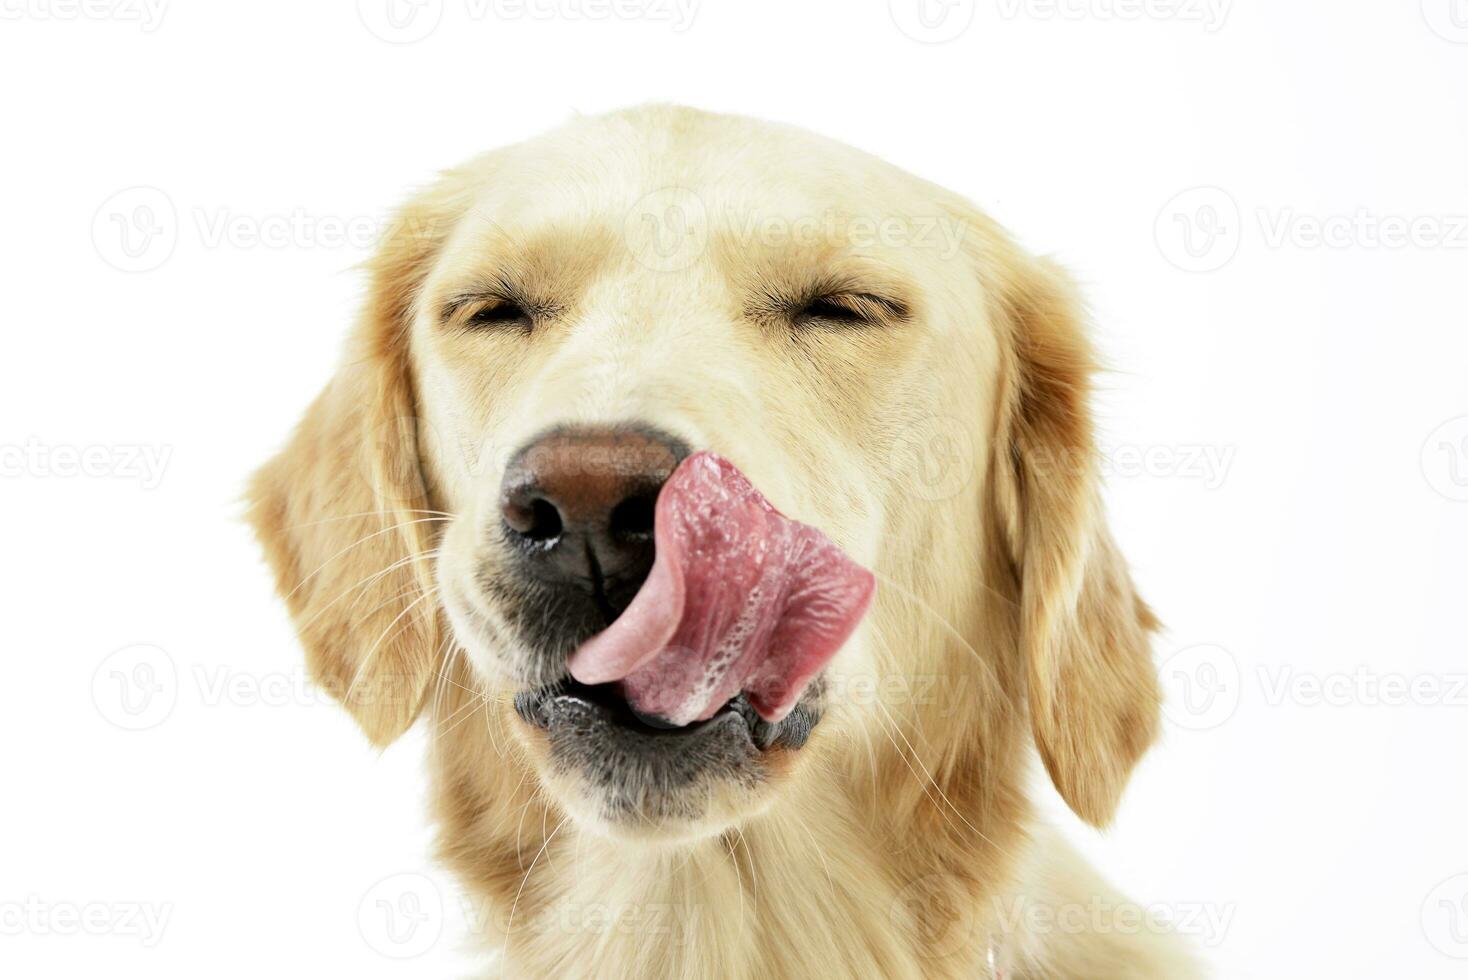 An adorable Golden retriever puppy licking her lips photo